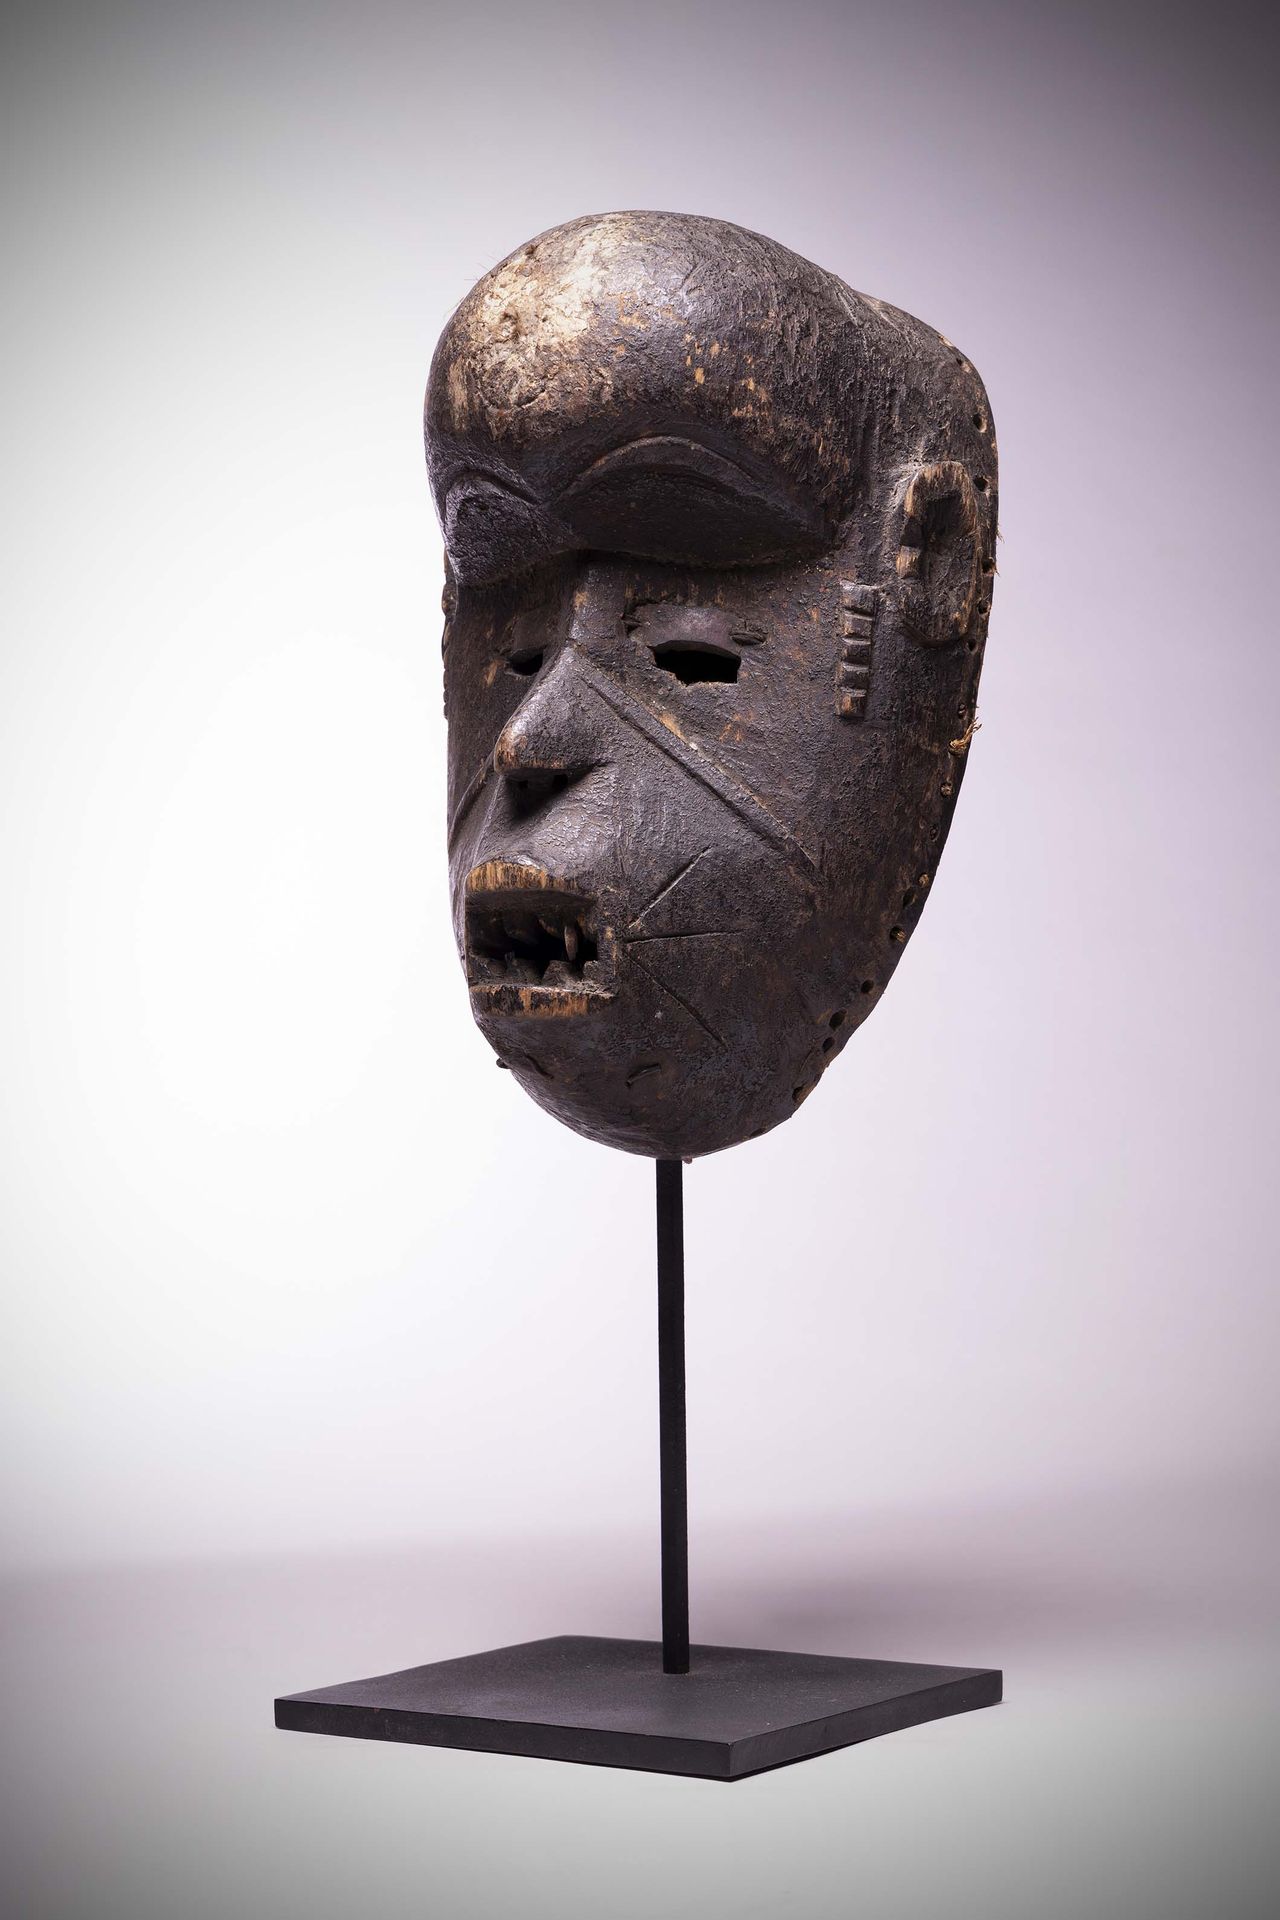 Null Idoma

Igala

(Nigeria) Máscara muy antigua con la frente redondeada del ti&hellip;